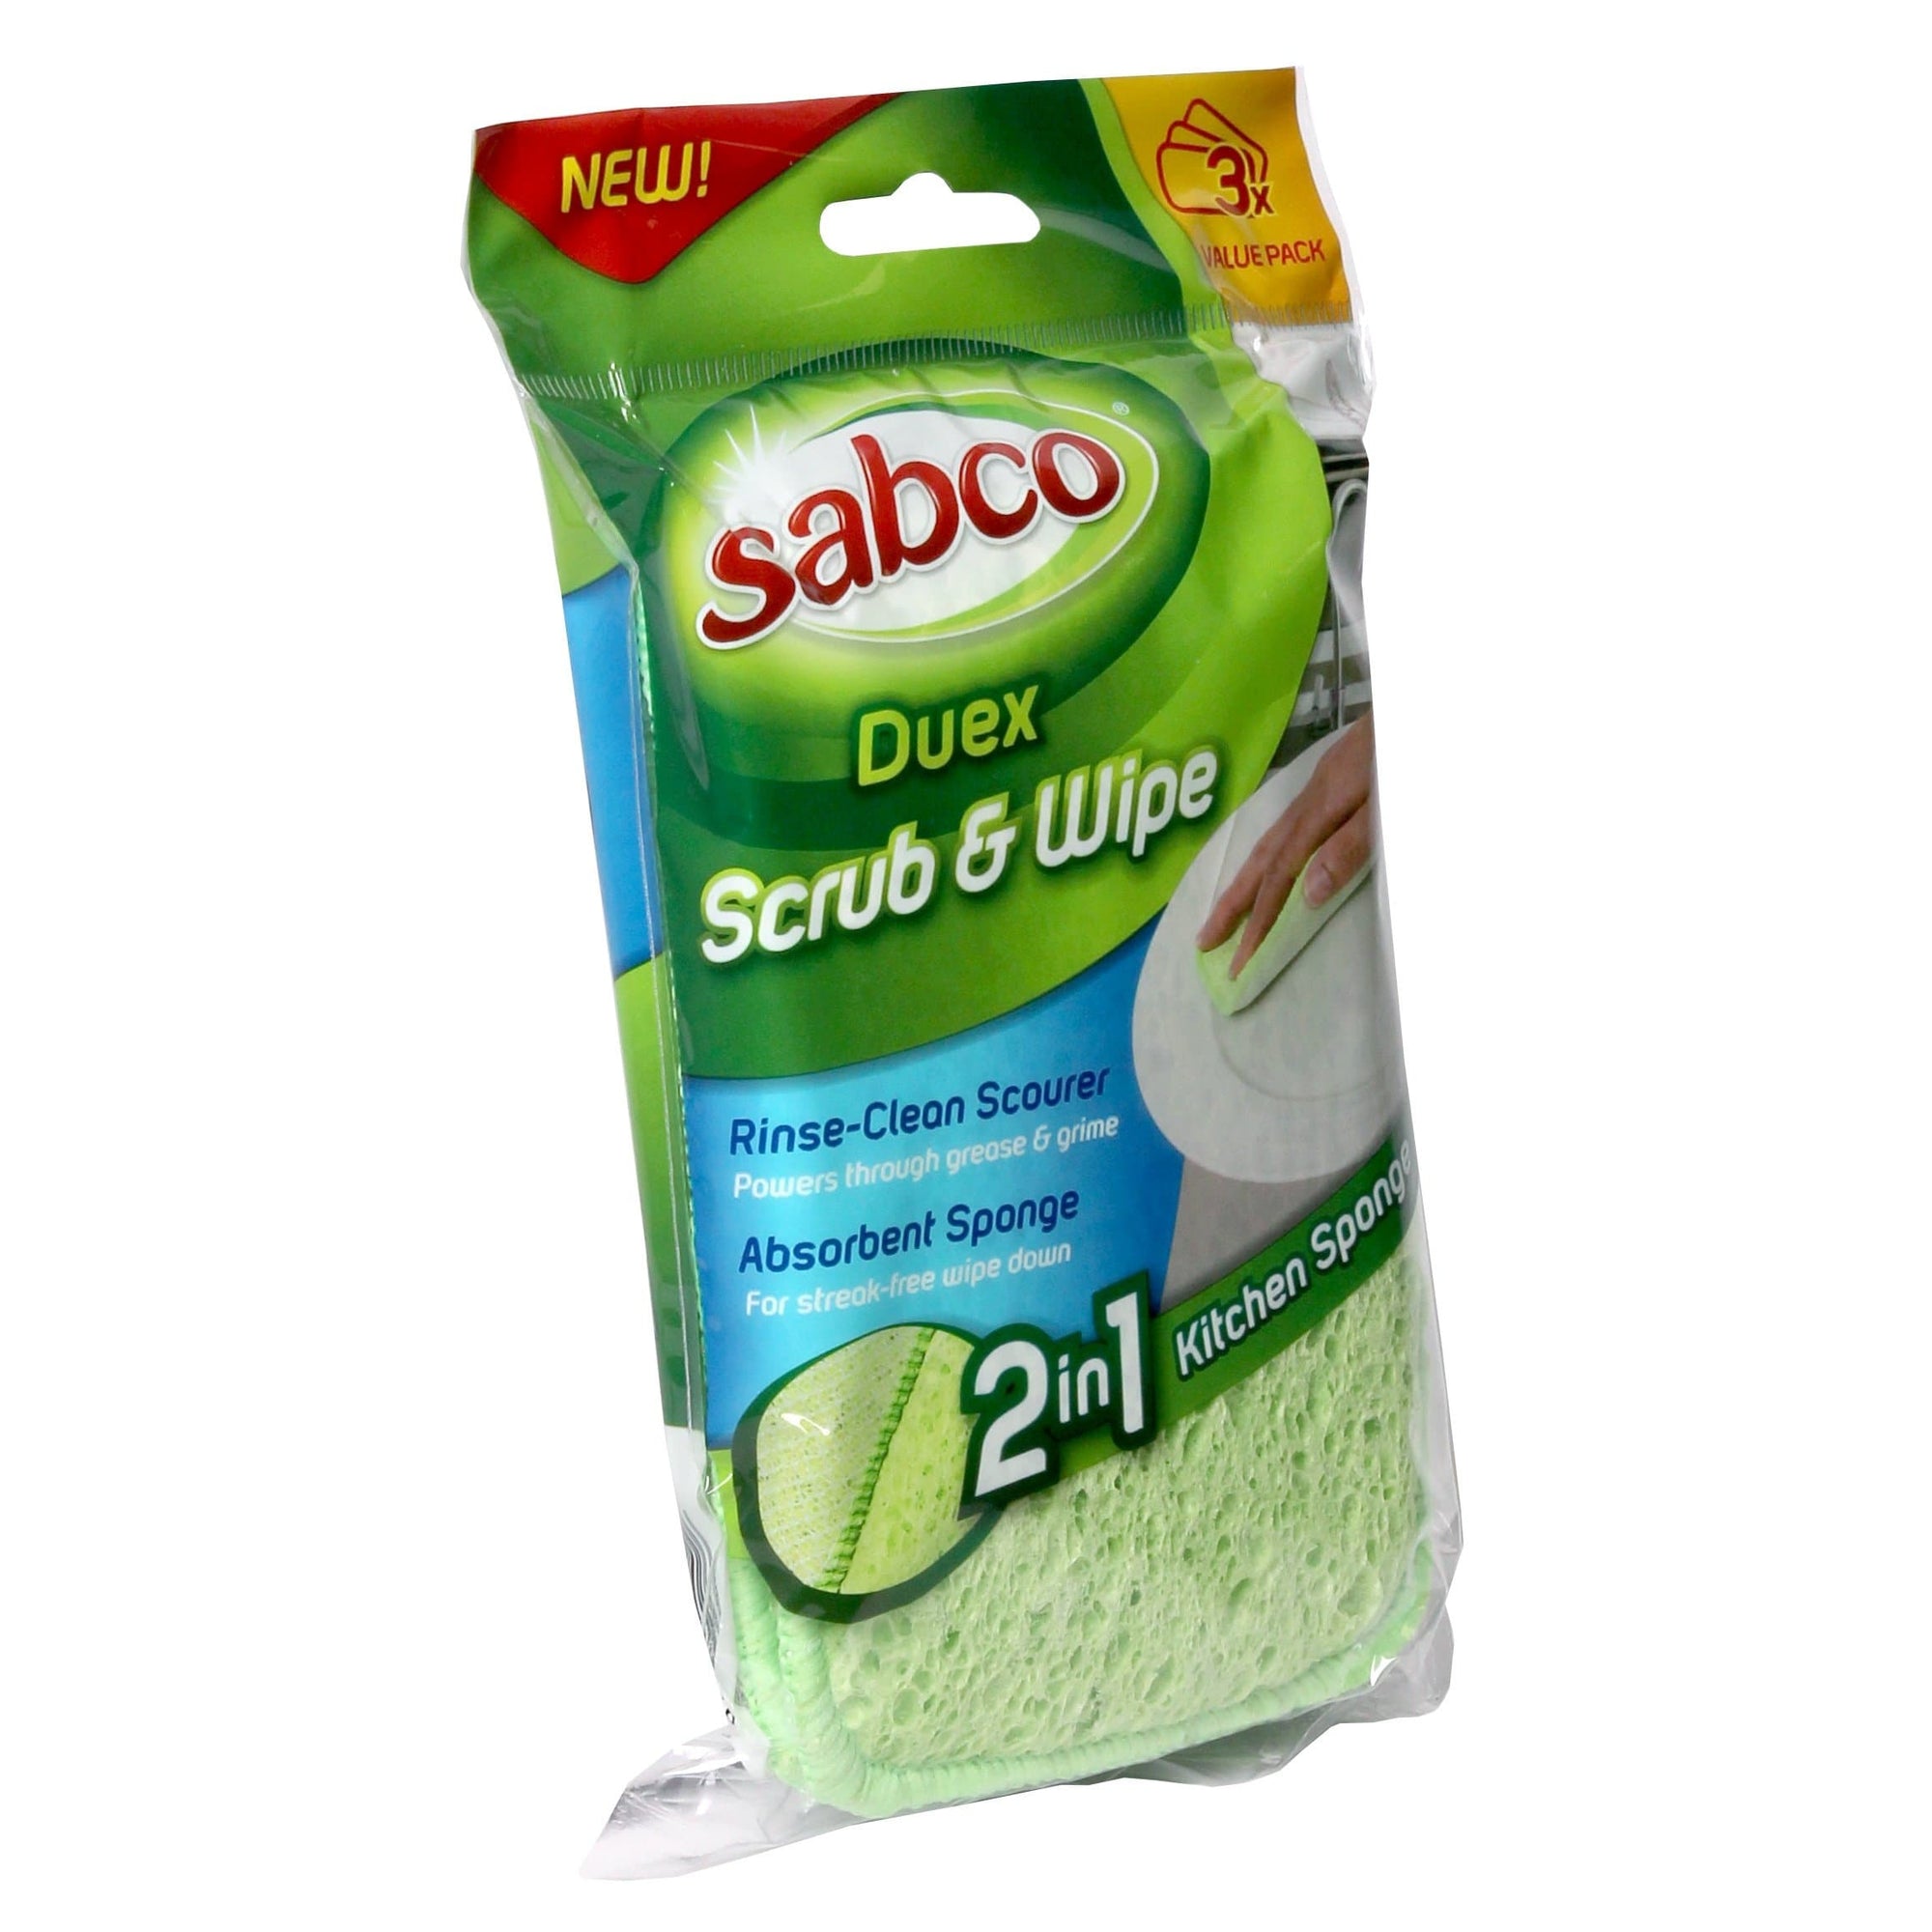 Sabco Duex Scrub & Wipe 3pk